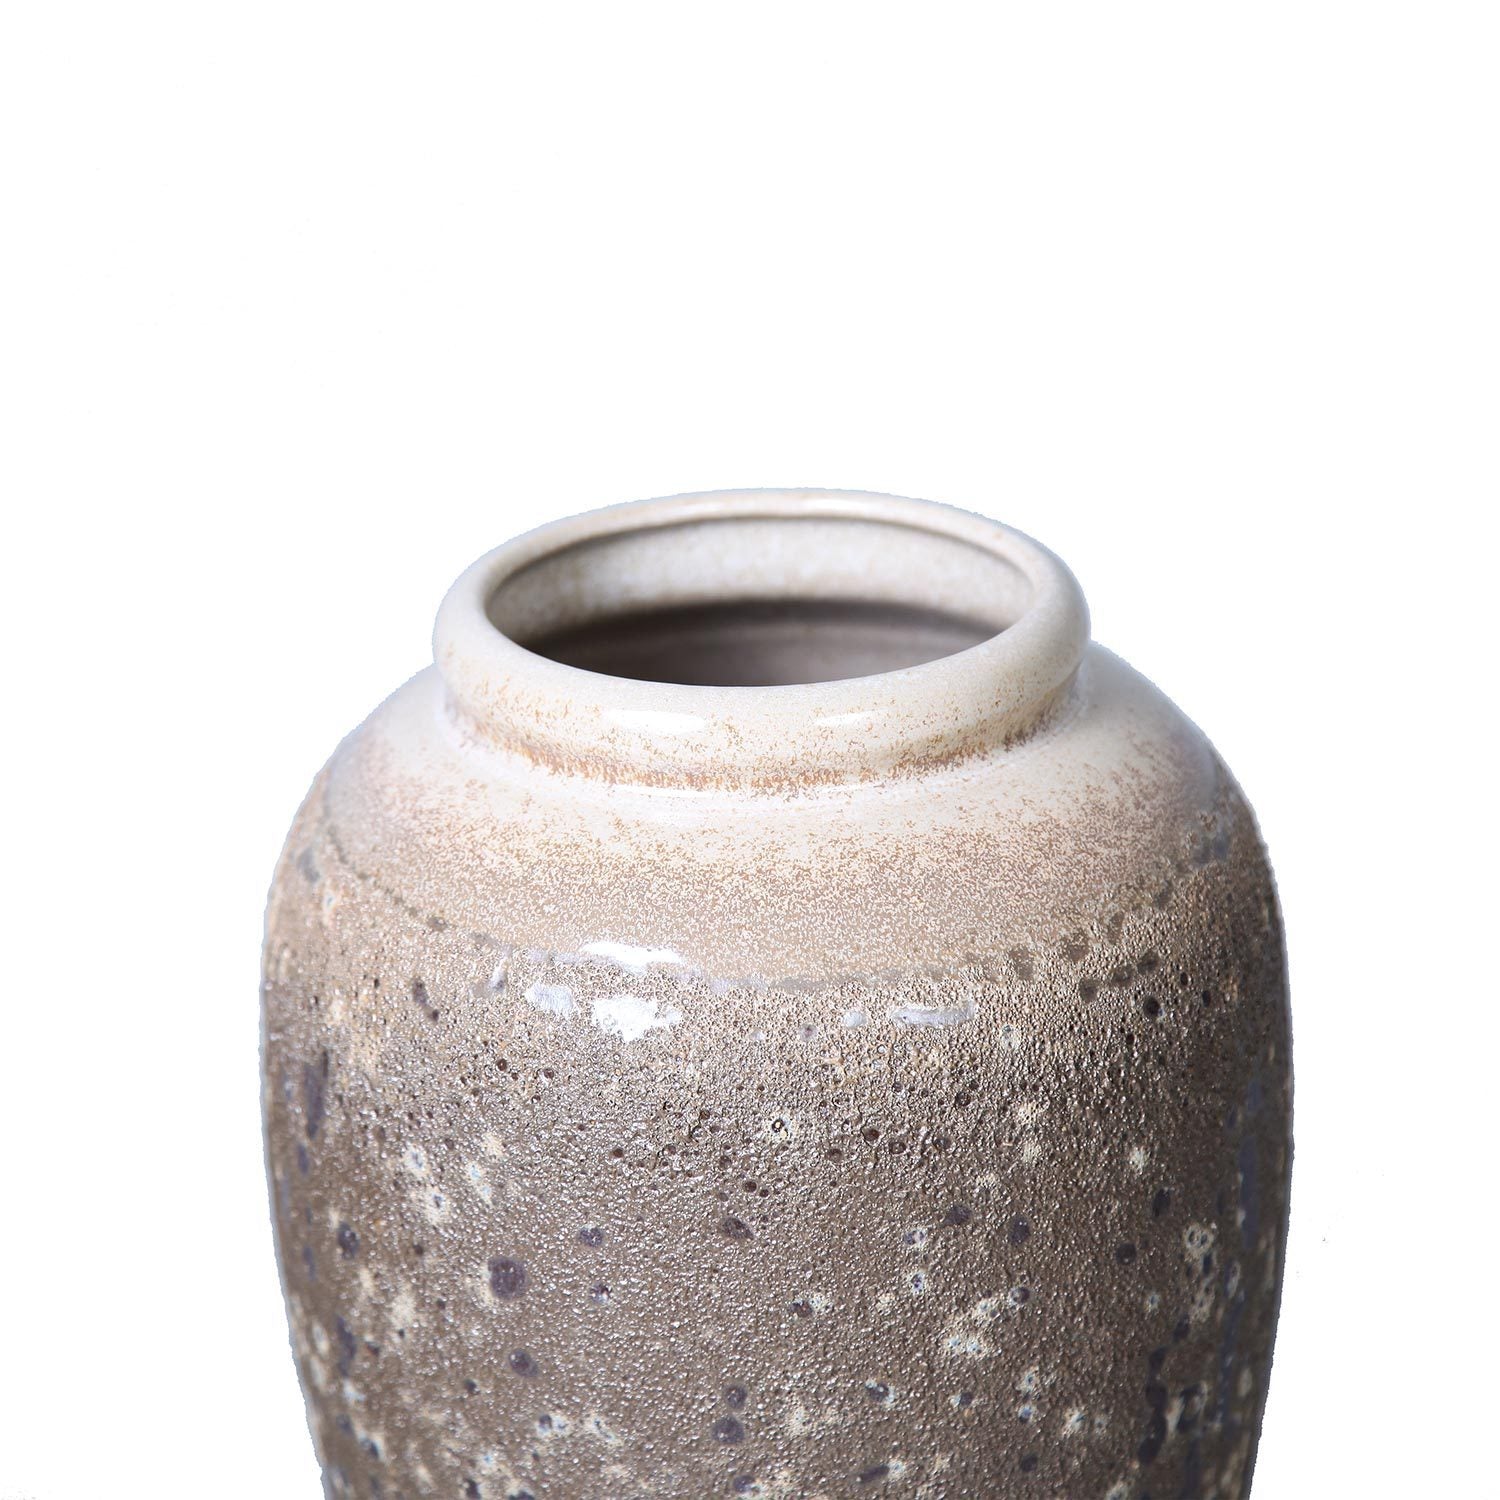 Artisanal Vintage Sand Ceramic Vase  6.5"D x 12"H